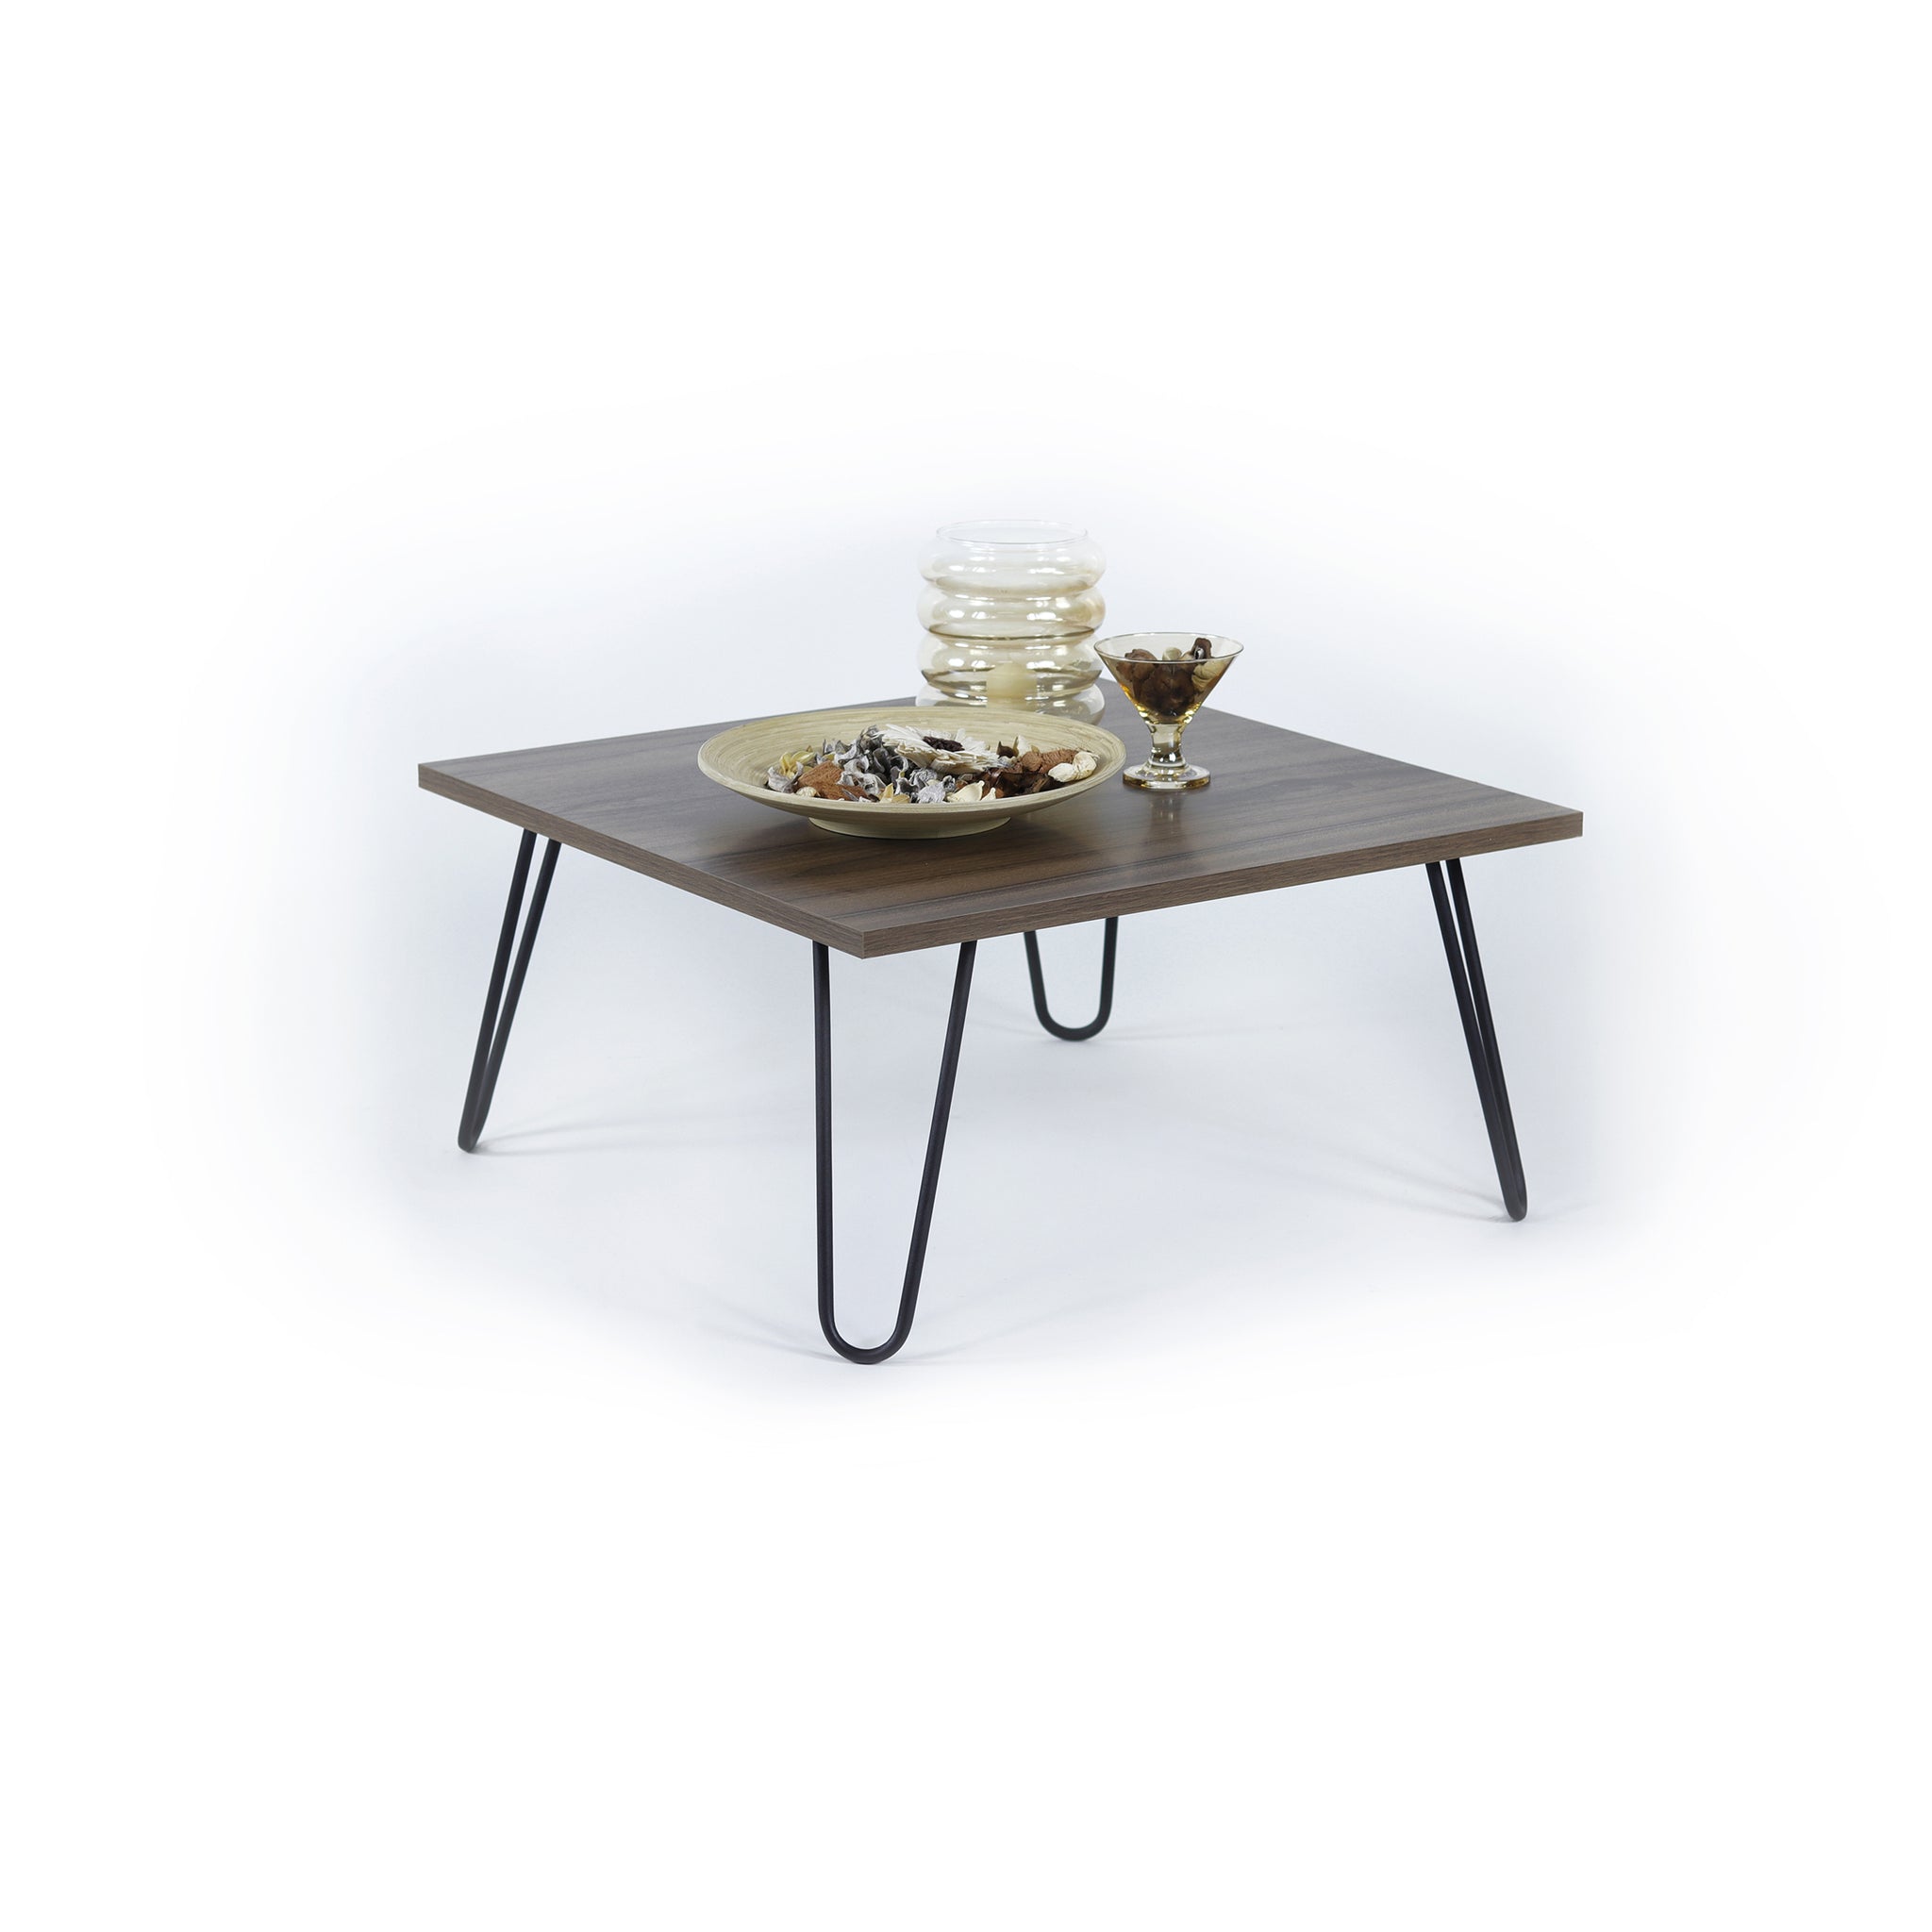 Lona 4 Metal Legs Coffee Table For Living Room white-wood